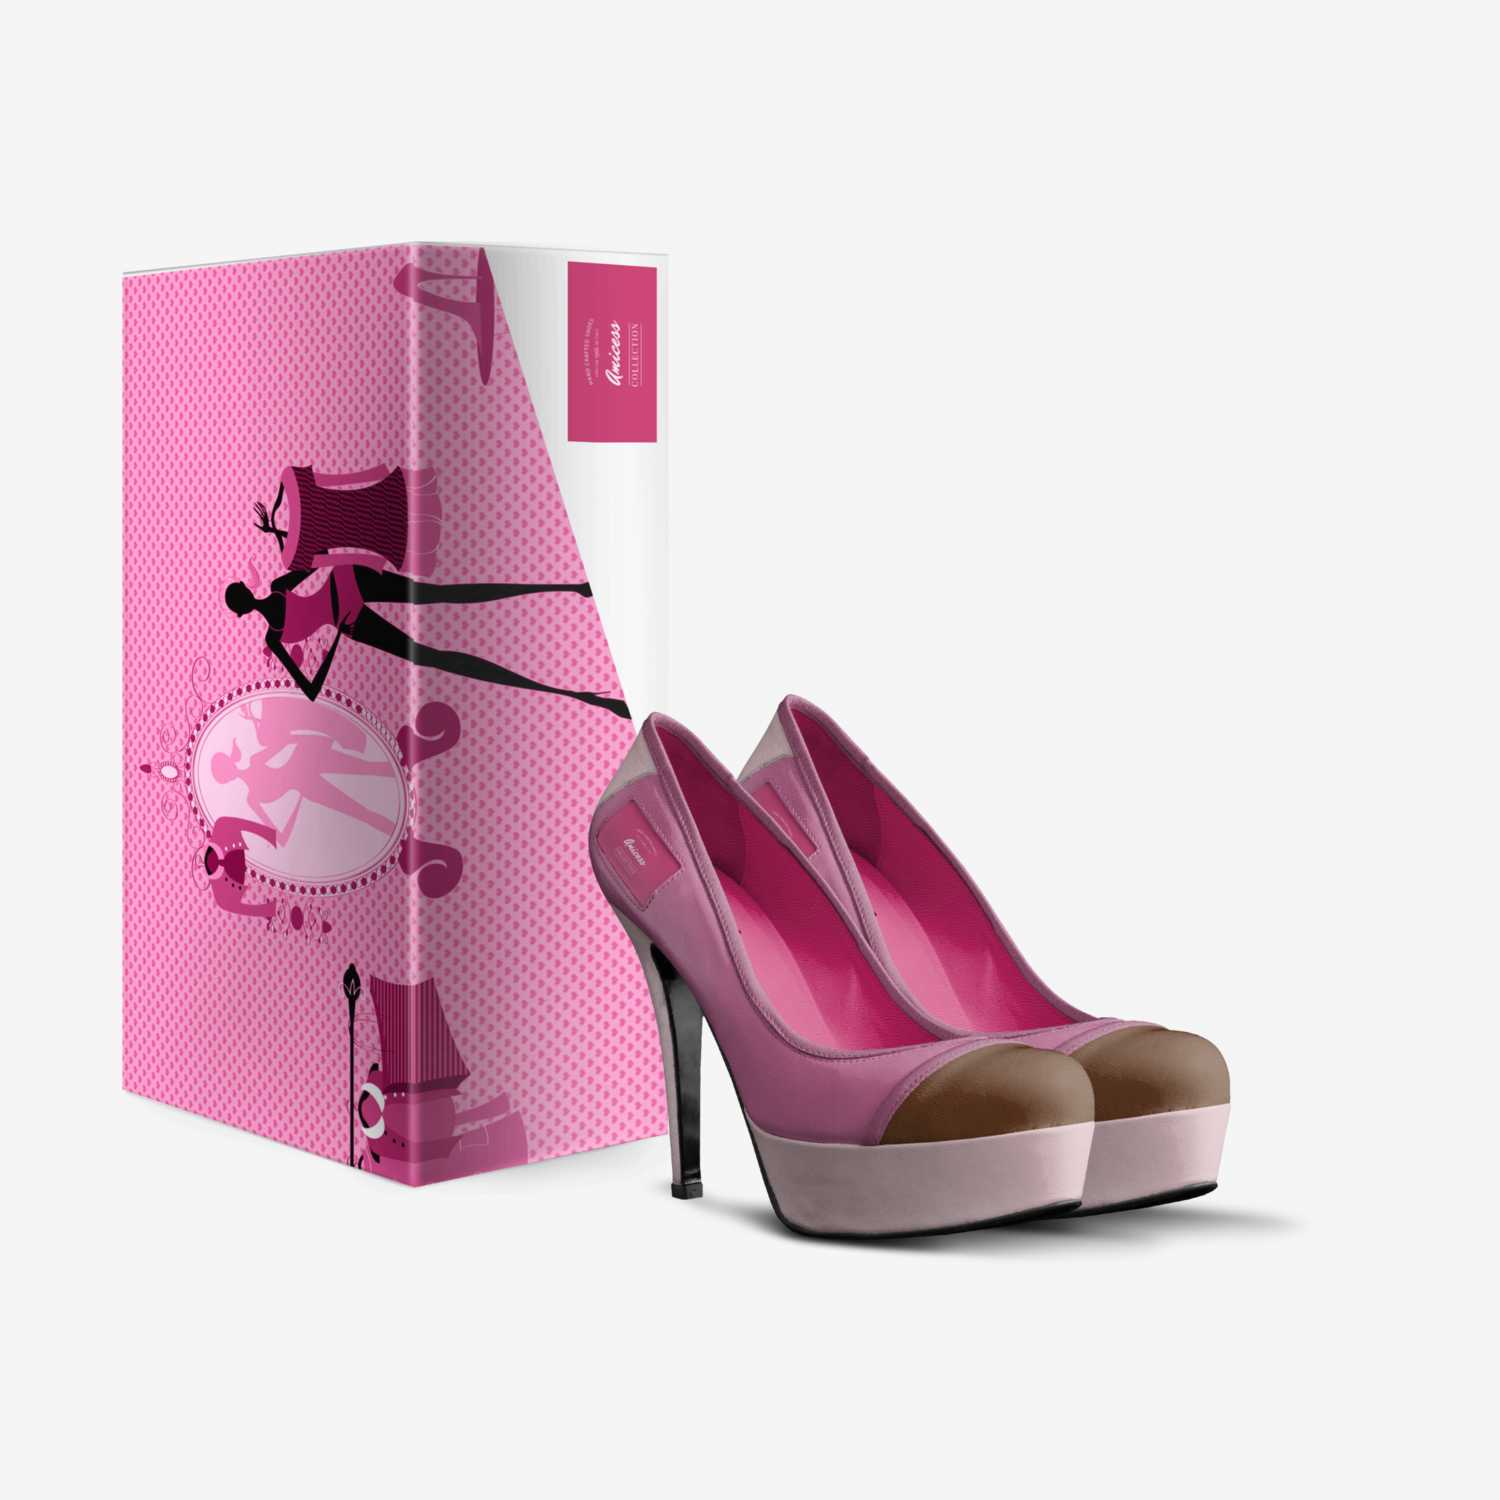 Amega custom made in Italy shoes by Eyram Tsegah | Box view